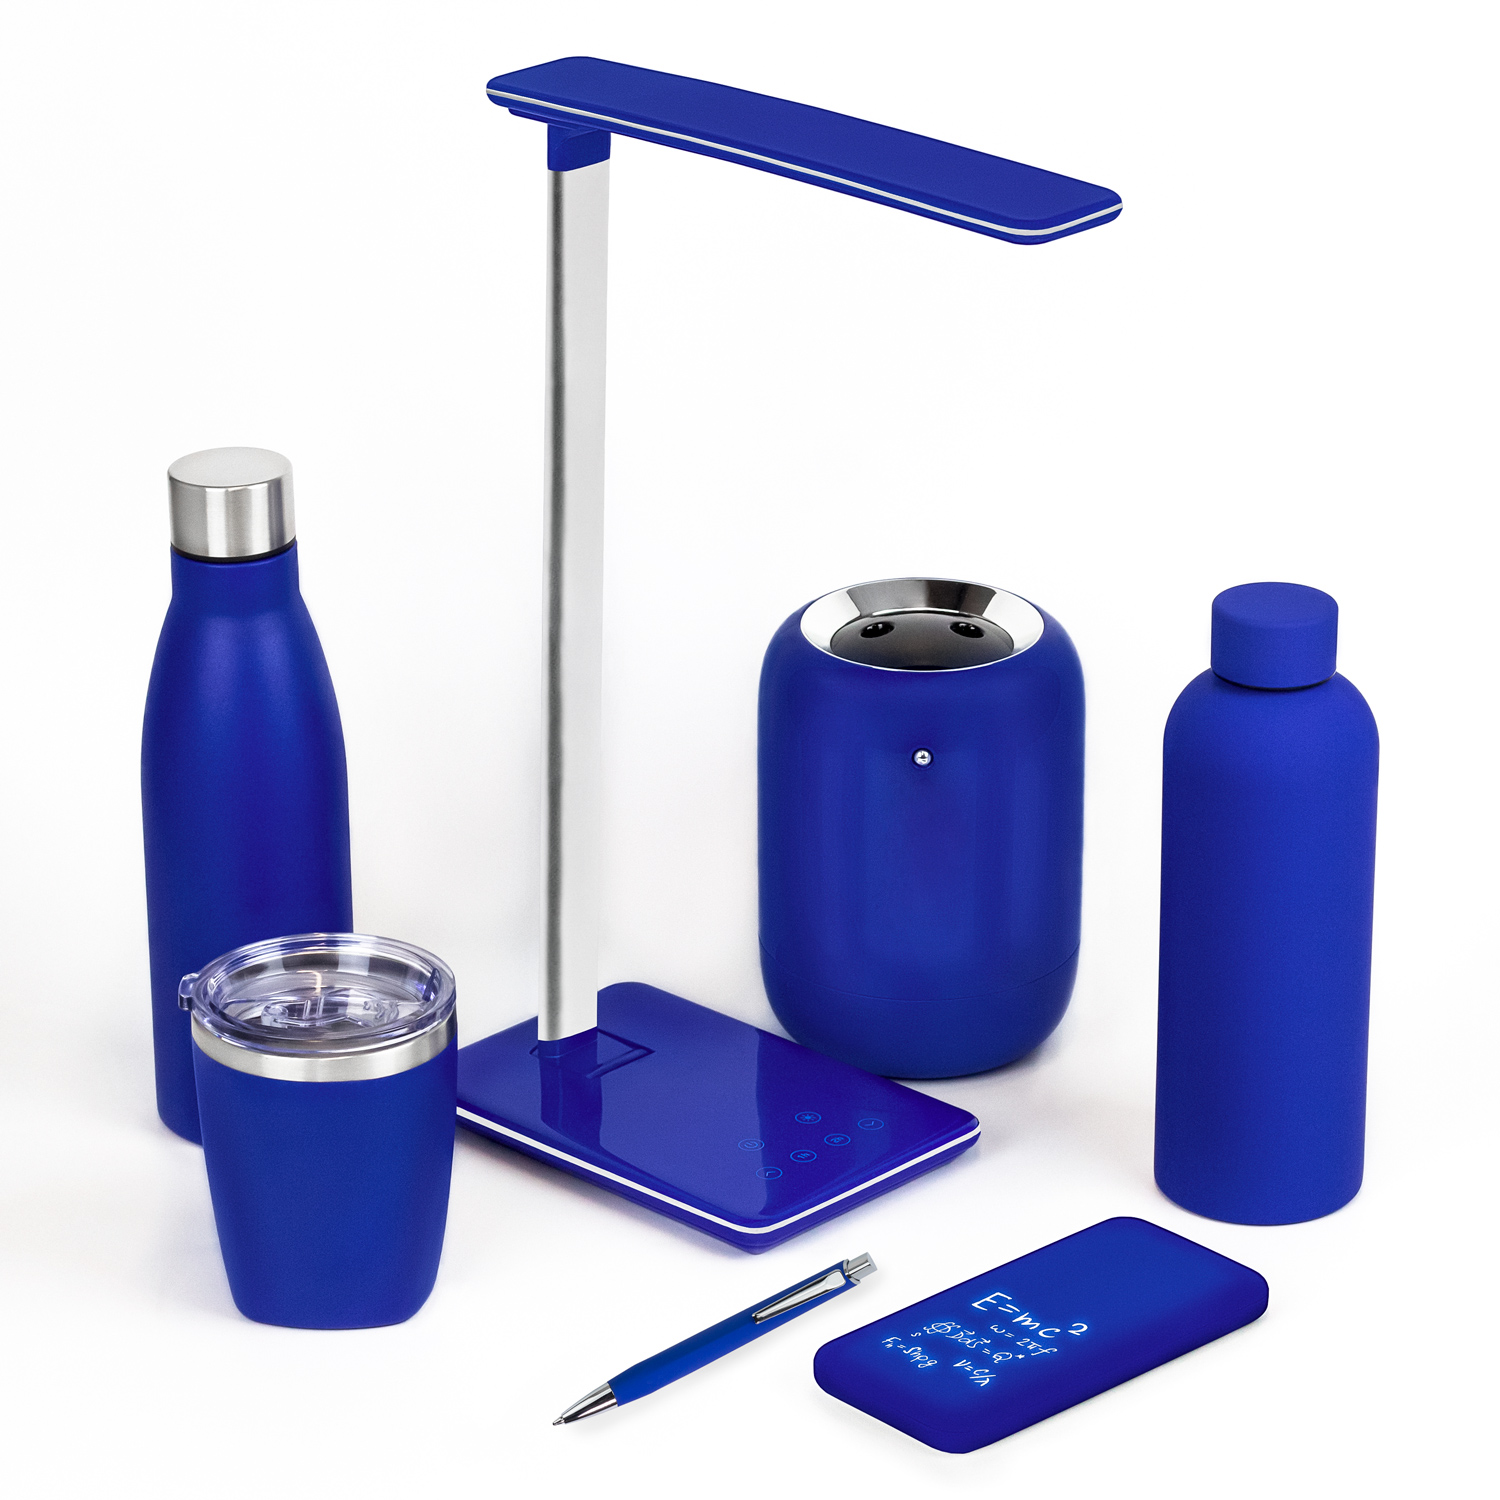 Термобутылка вакуумная герметичная, Fresco Neo, Ultramarine, 500 ml, ярко-синяя